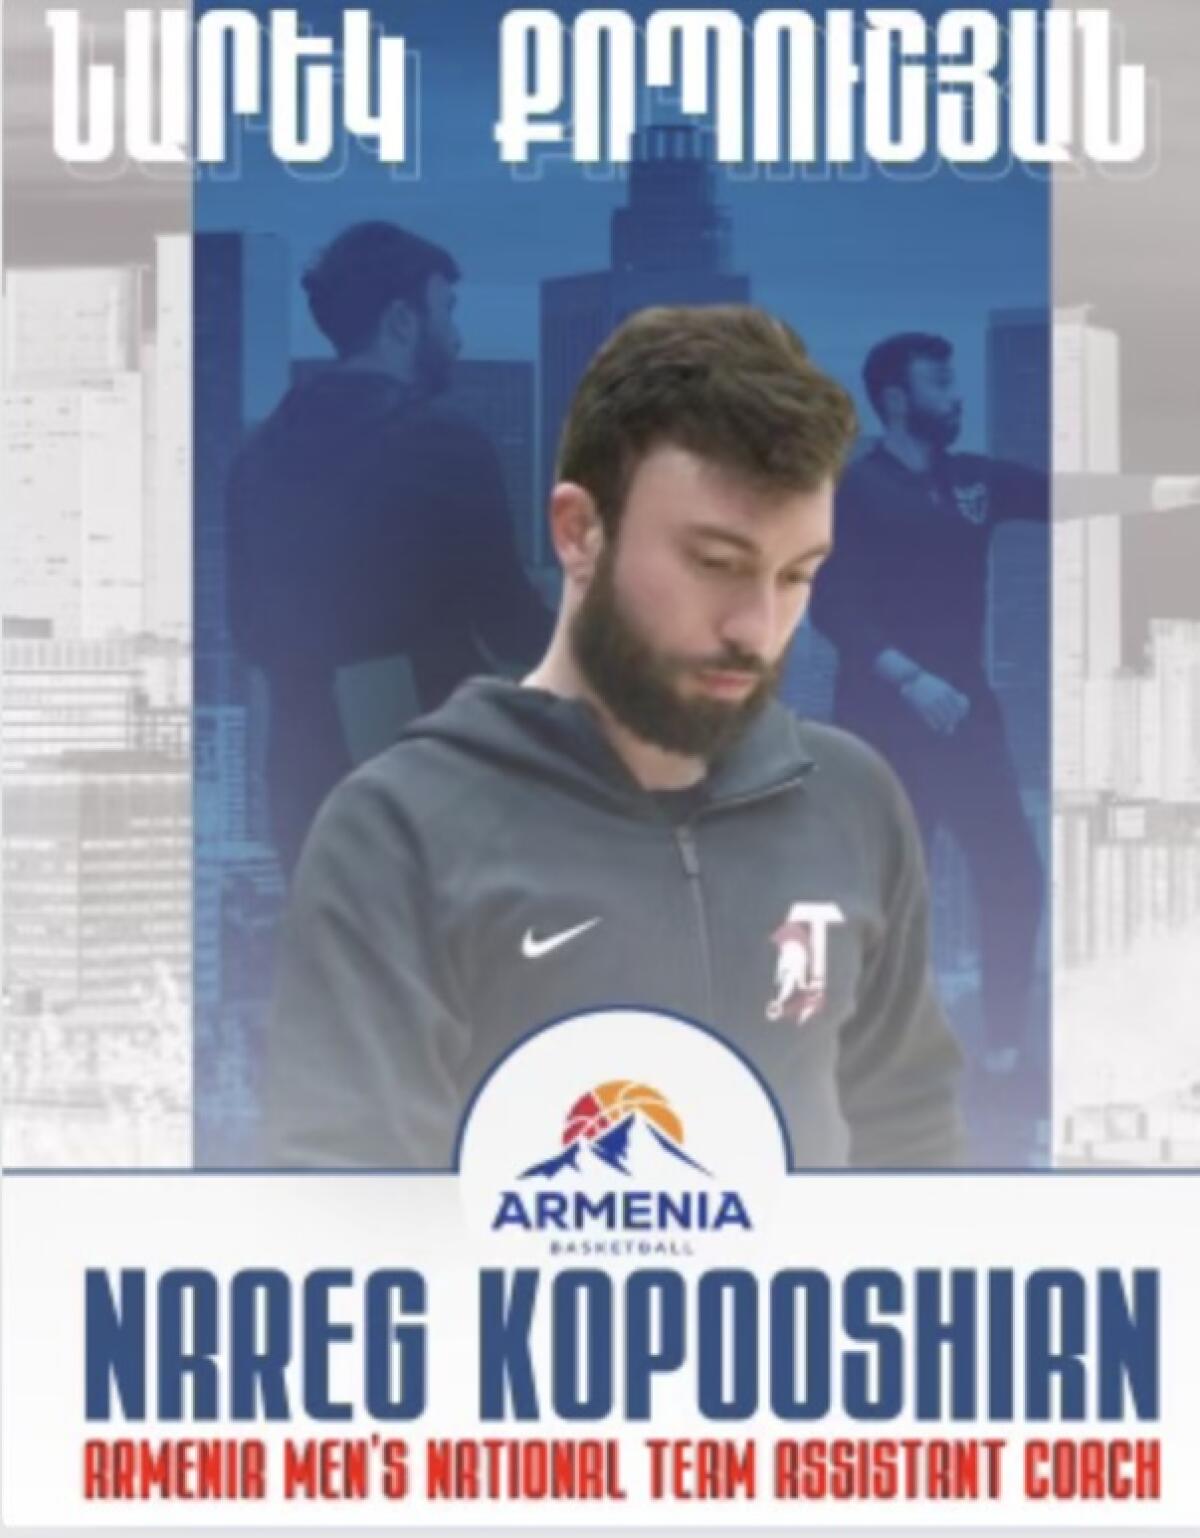 AGBU coach Nareg Kopooshian will be an assistant for the Armenia national team.